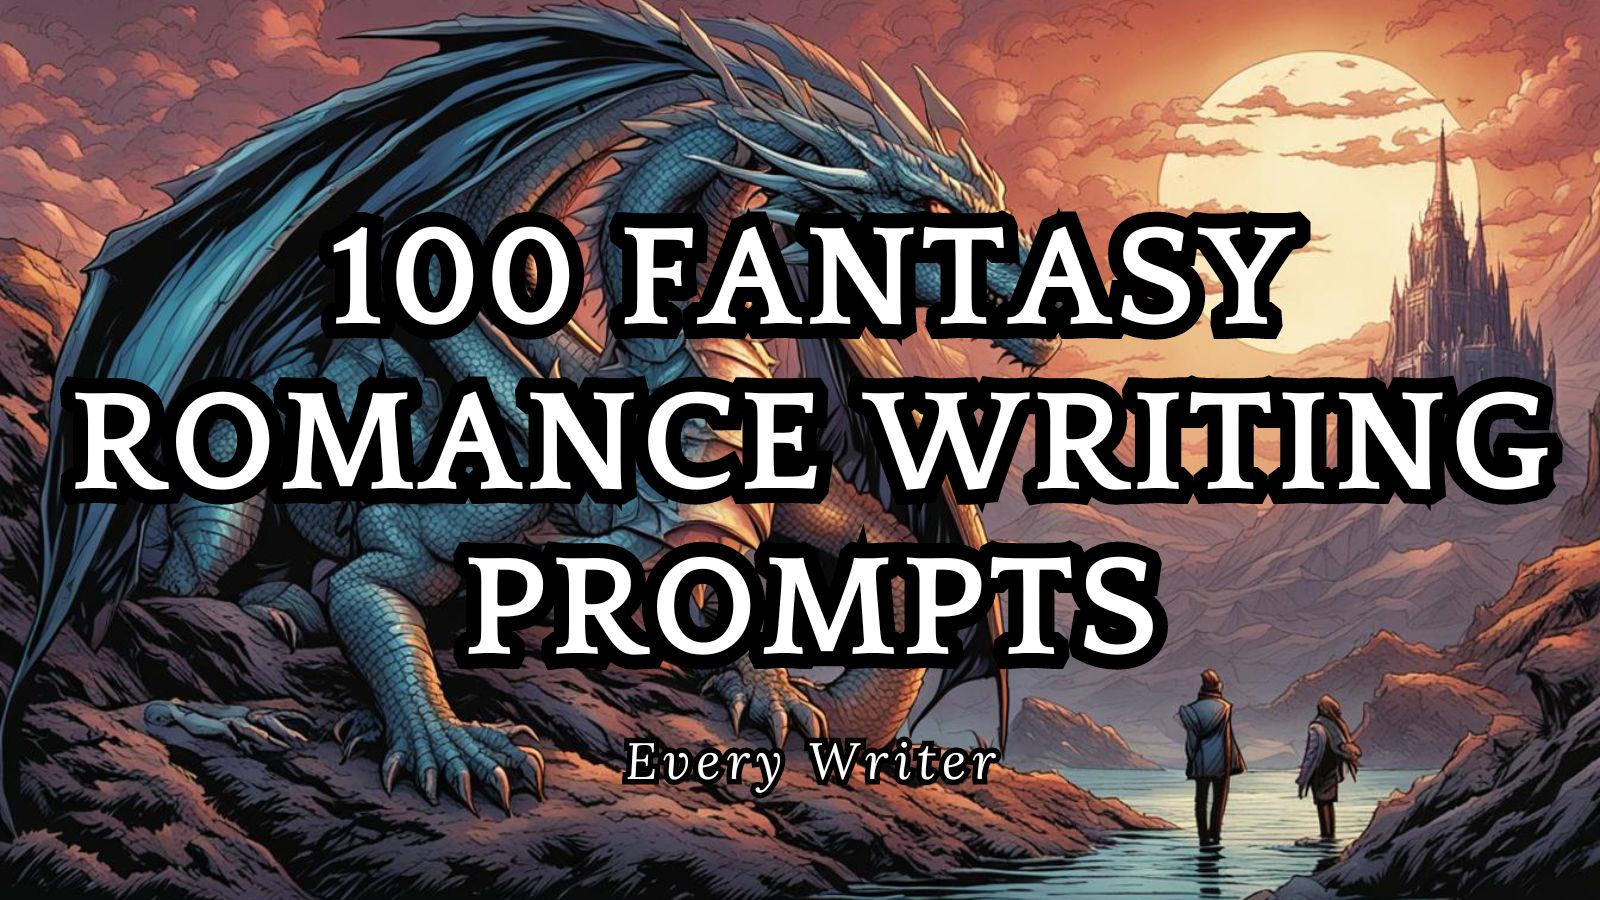 100 fantasy romance writing prompts